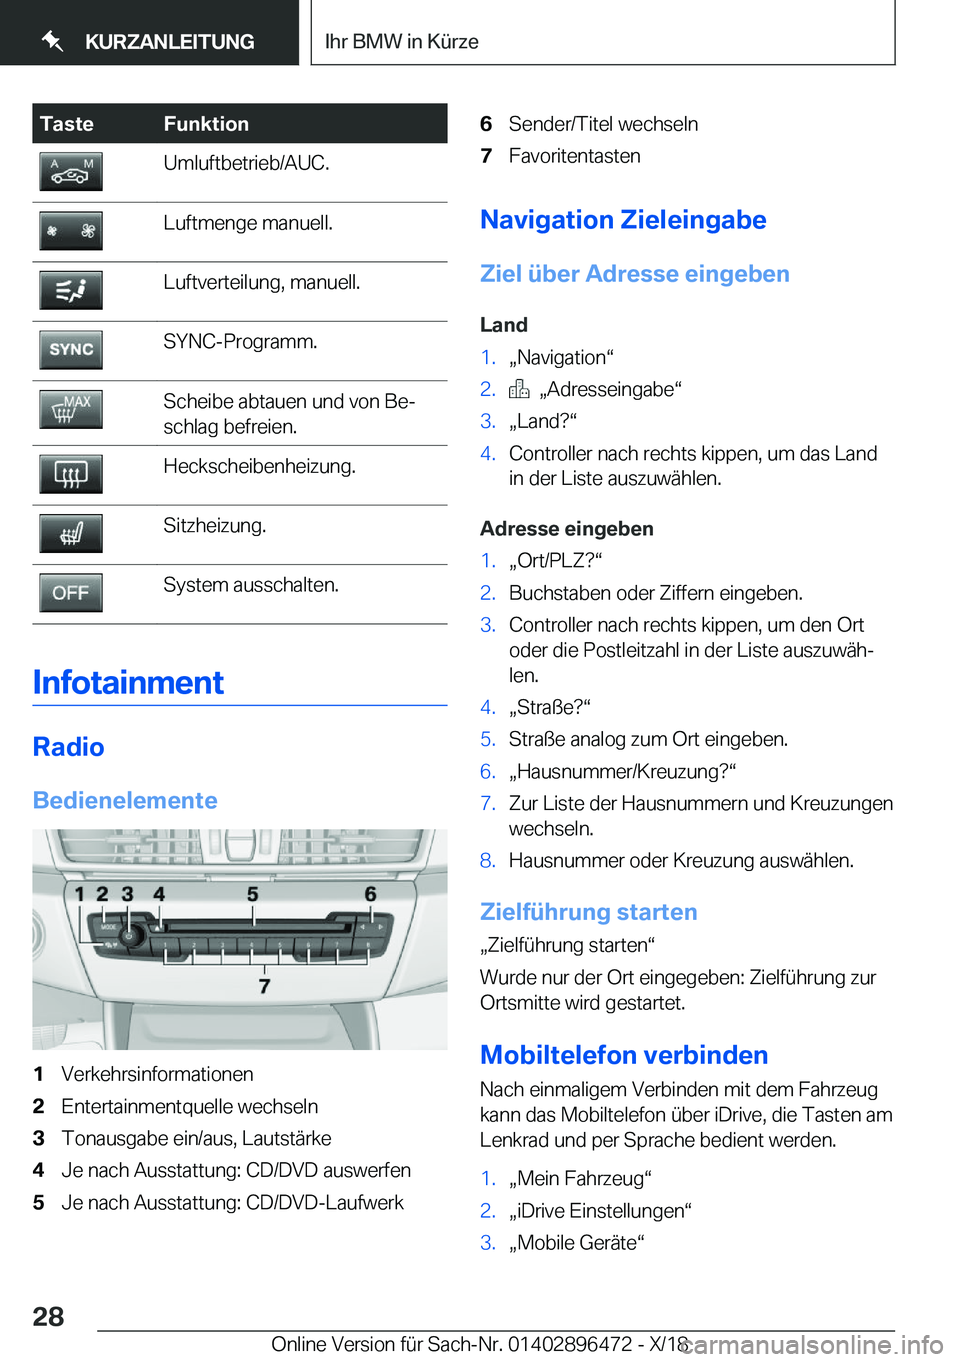 BMW X1 2019  Betriebsanleitungen (in German) �T�a�s�t�e�F�u�n�k�t�i�o�n�U�m�l�u�f�t�b�e�t�r�i�e�b�/�A�U�C�.�L�u�f�t�m�e�n�g�e��m�a�n�u�e�l�l�.�L�u�f�t�v�e�r�t�e�i�l�u�n�g�,��m�a�n�u�e�l�l�.�S�Y�N�C�-�P�r�o�g�r�a�m�m�.�S�c�h�e�i�b�e��a�b�t�a�u